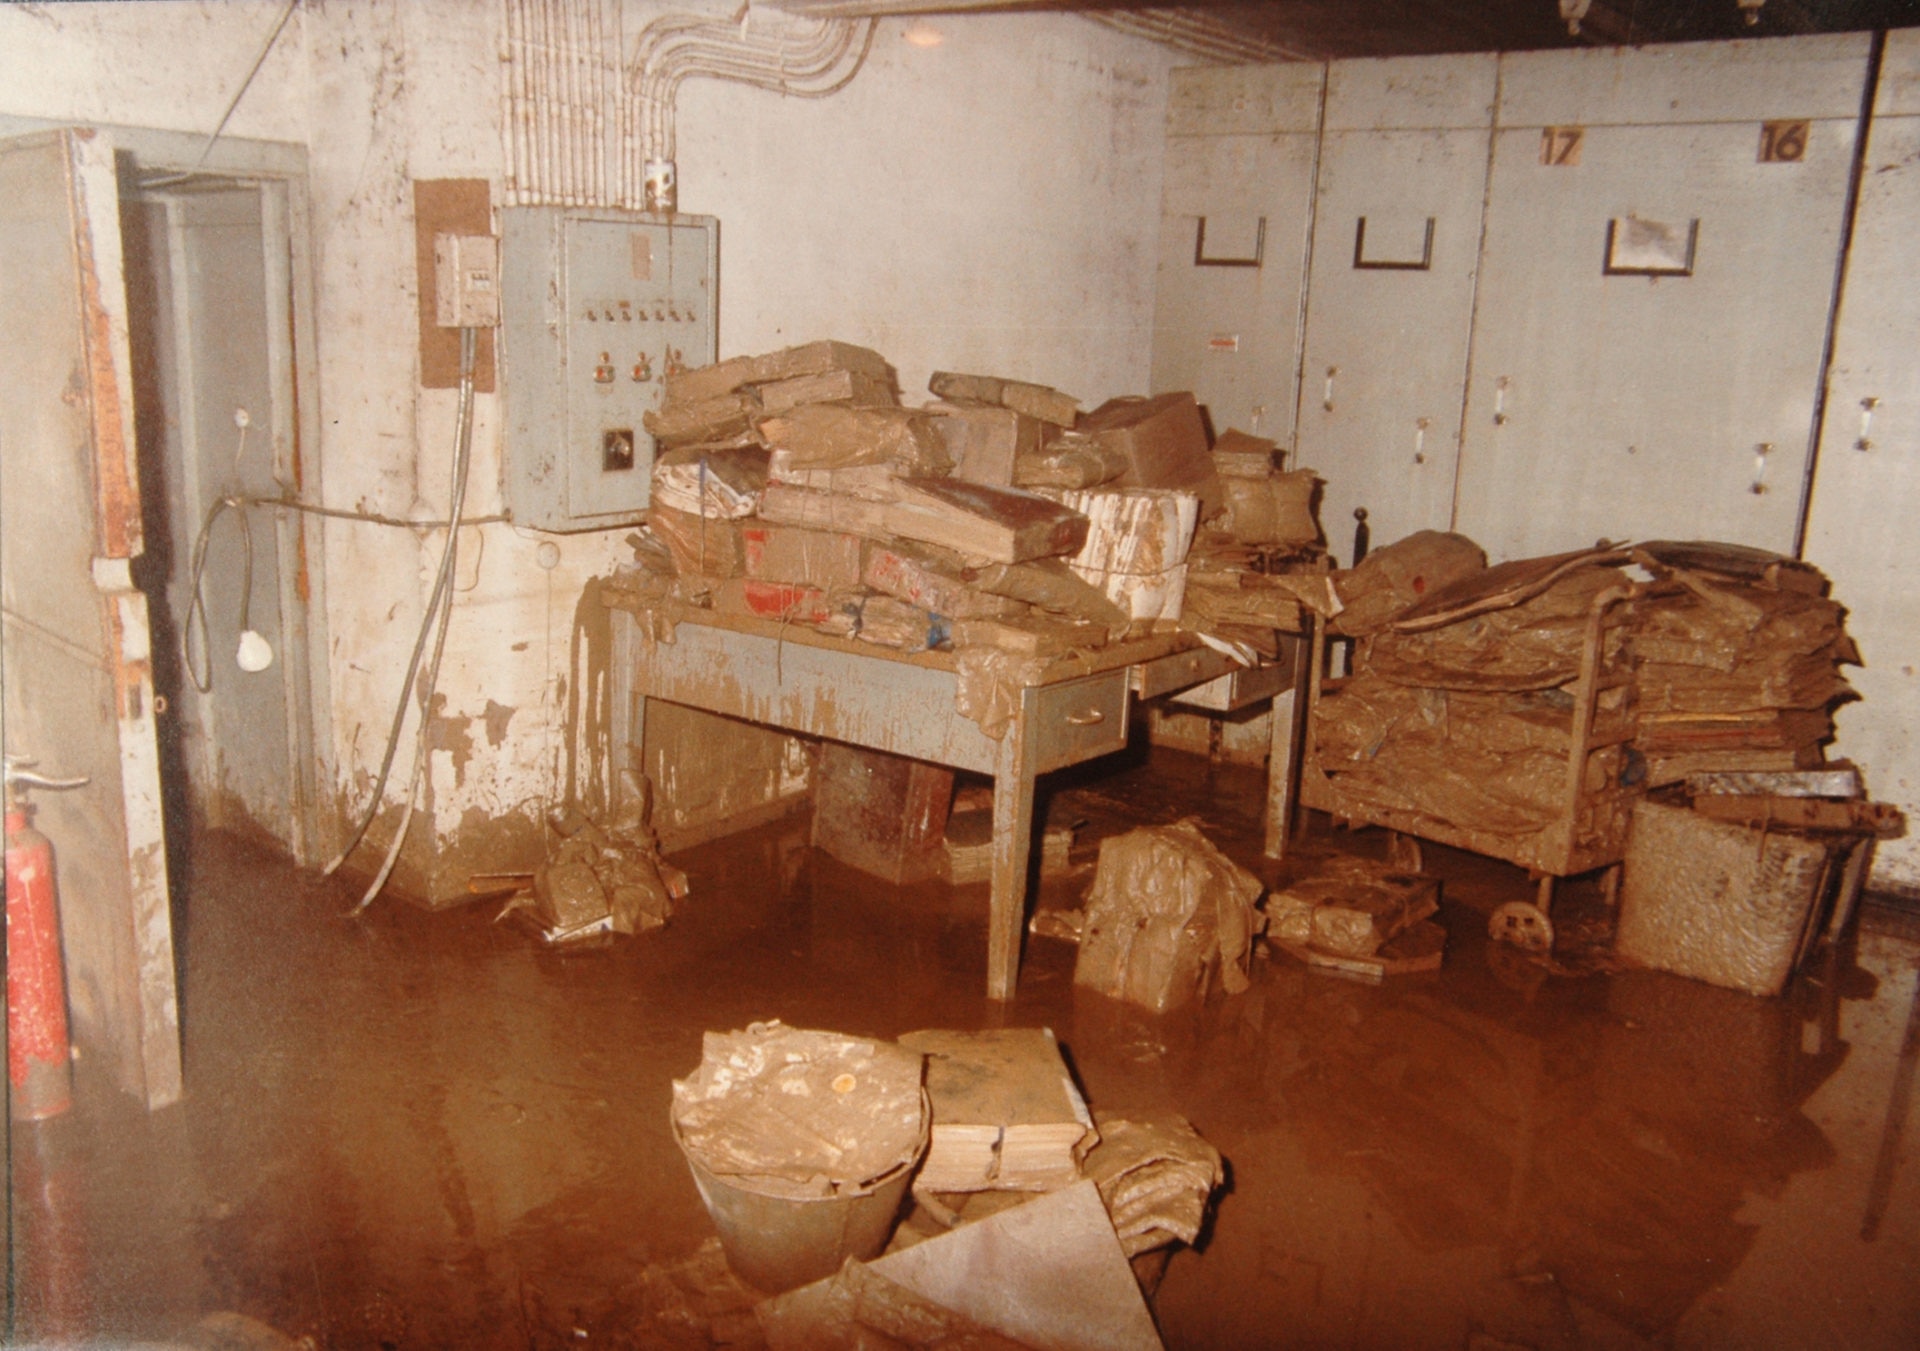 The 1983 BIlbao catastrophe